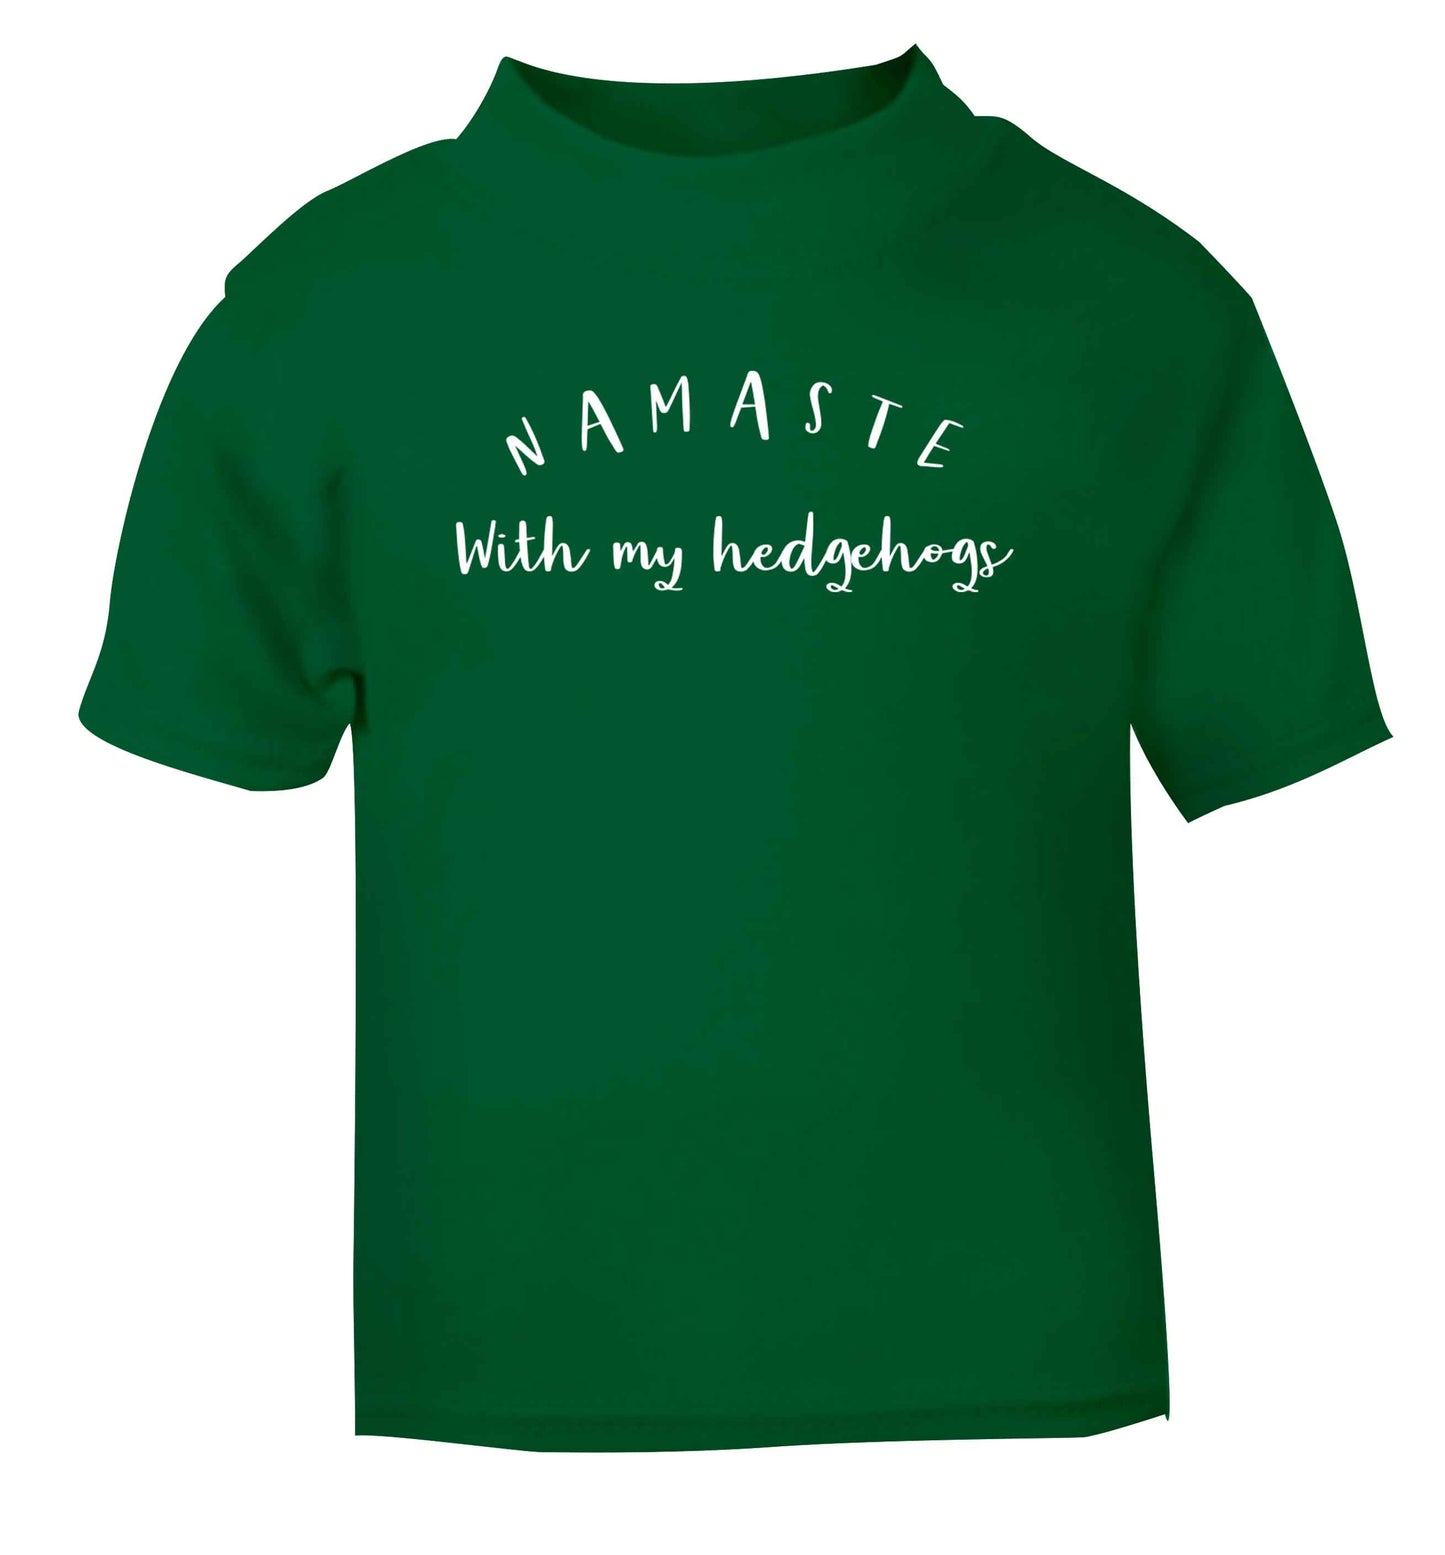 Namaste with my hedgehog green Baby Toddler Tshirt 2 Years